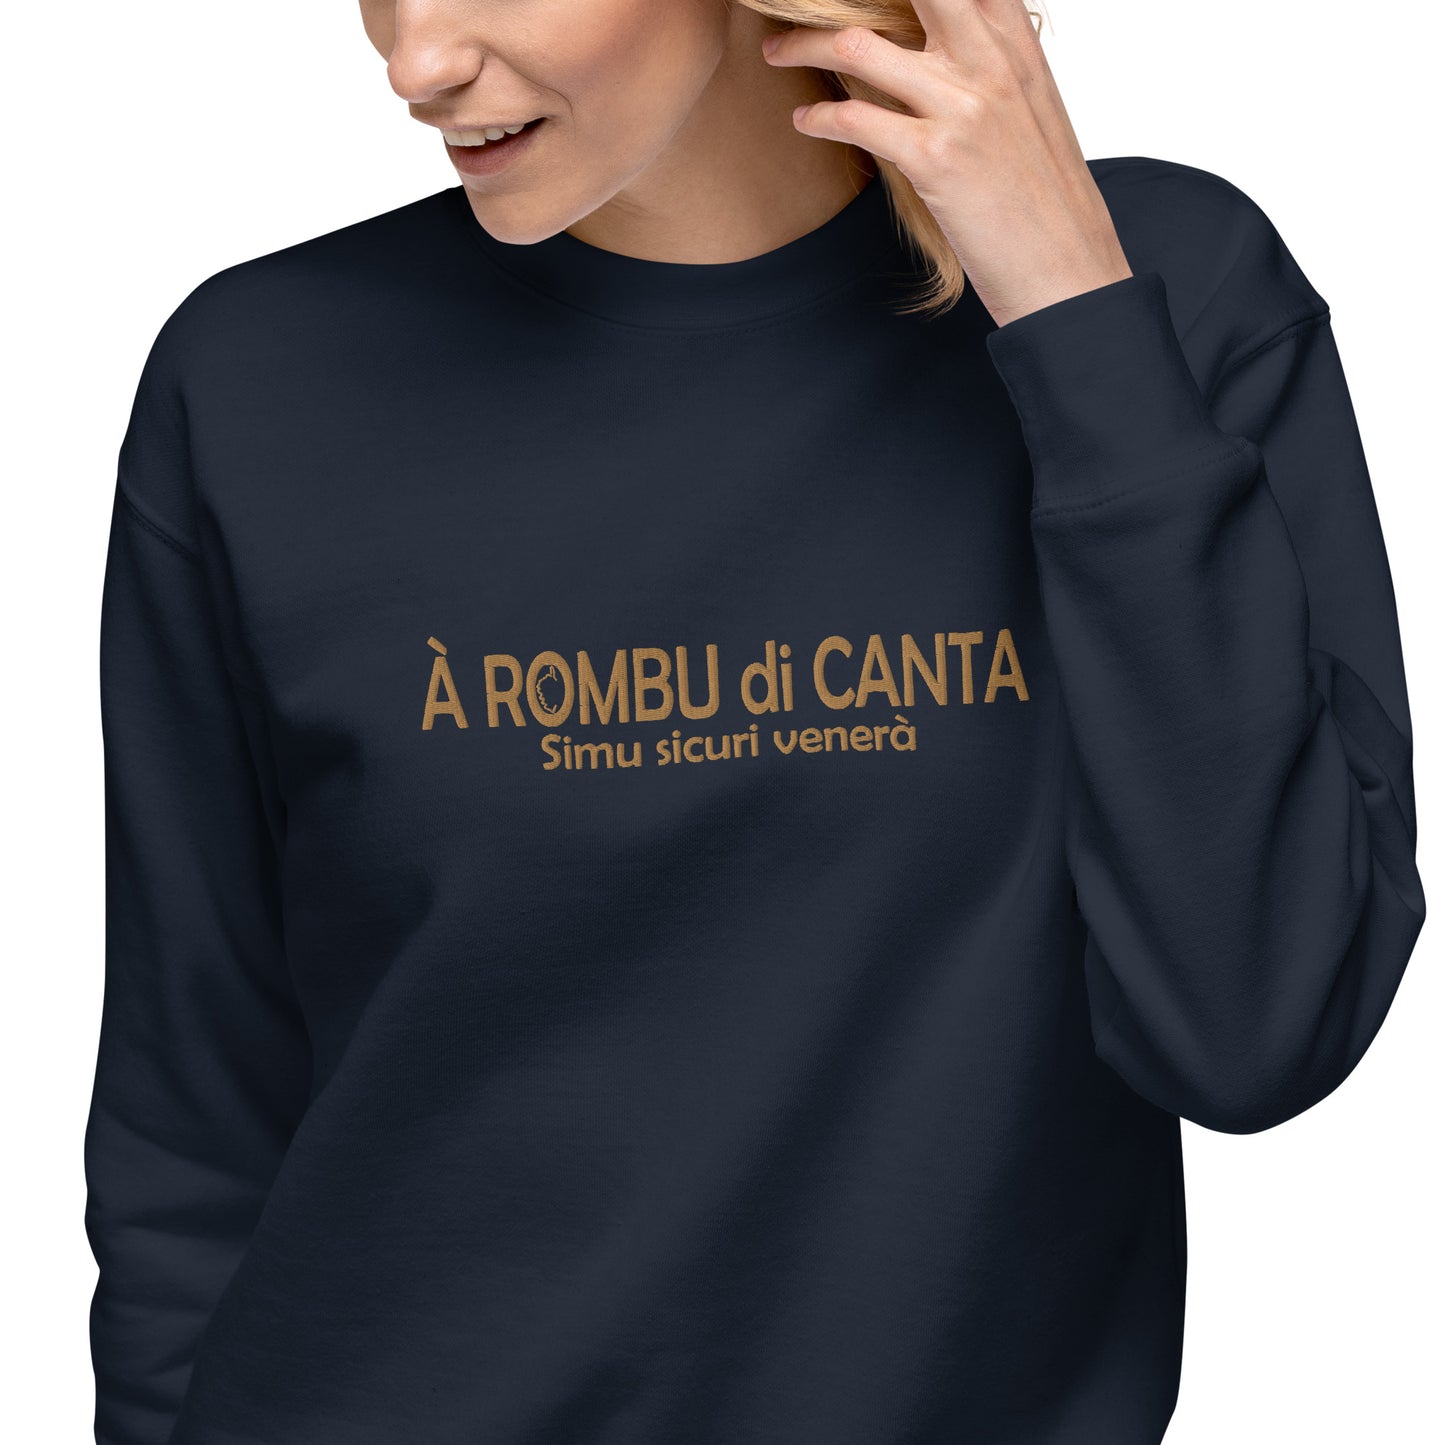 Sweatshirt premium Brodé A Rombu di Canta